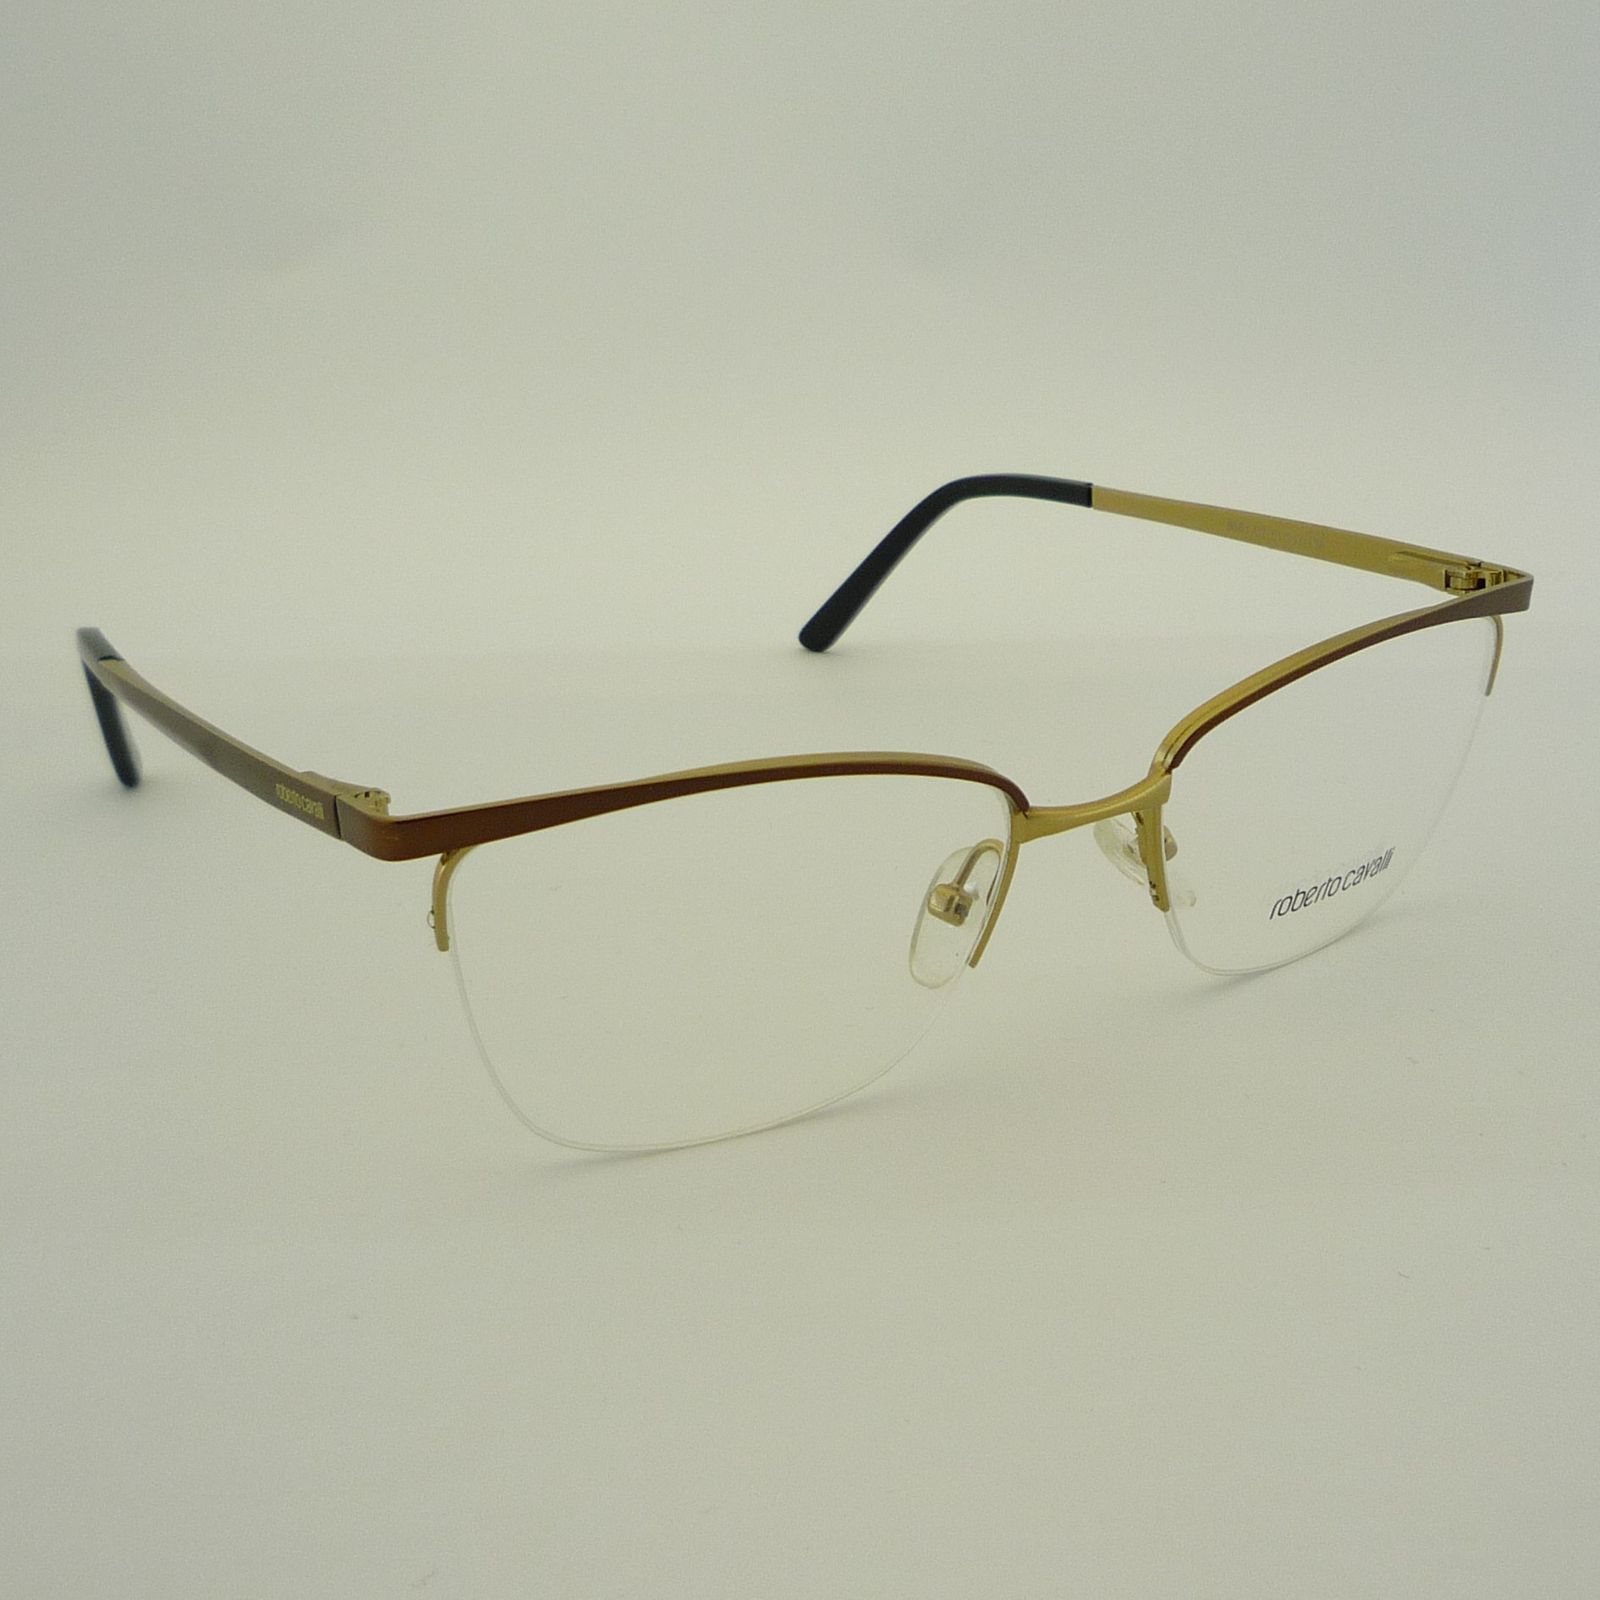 فریم عینک طبی زنانه روبرتو کاوالی مدل 6581c2 -  - 4